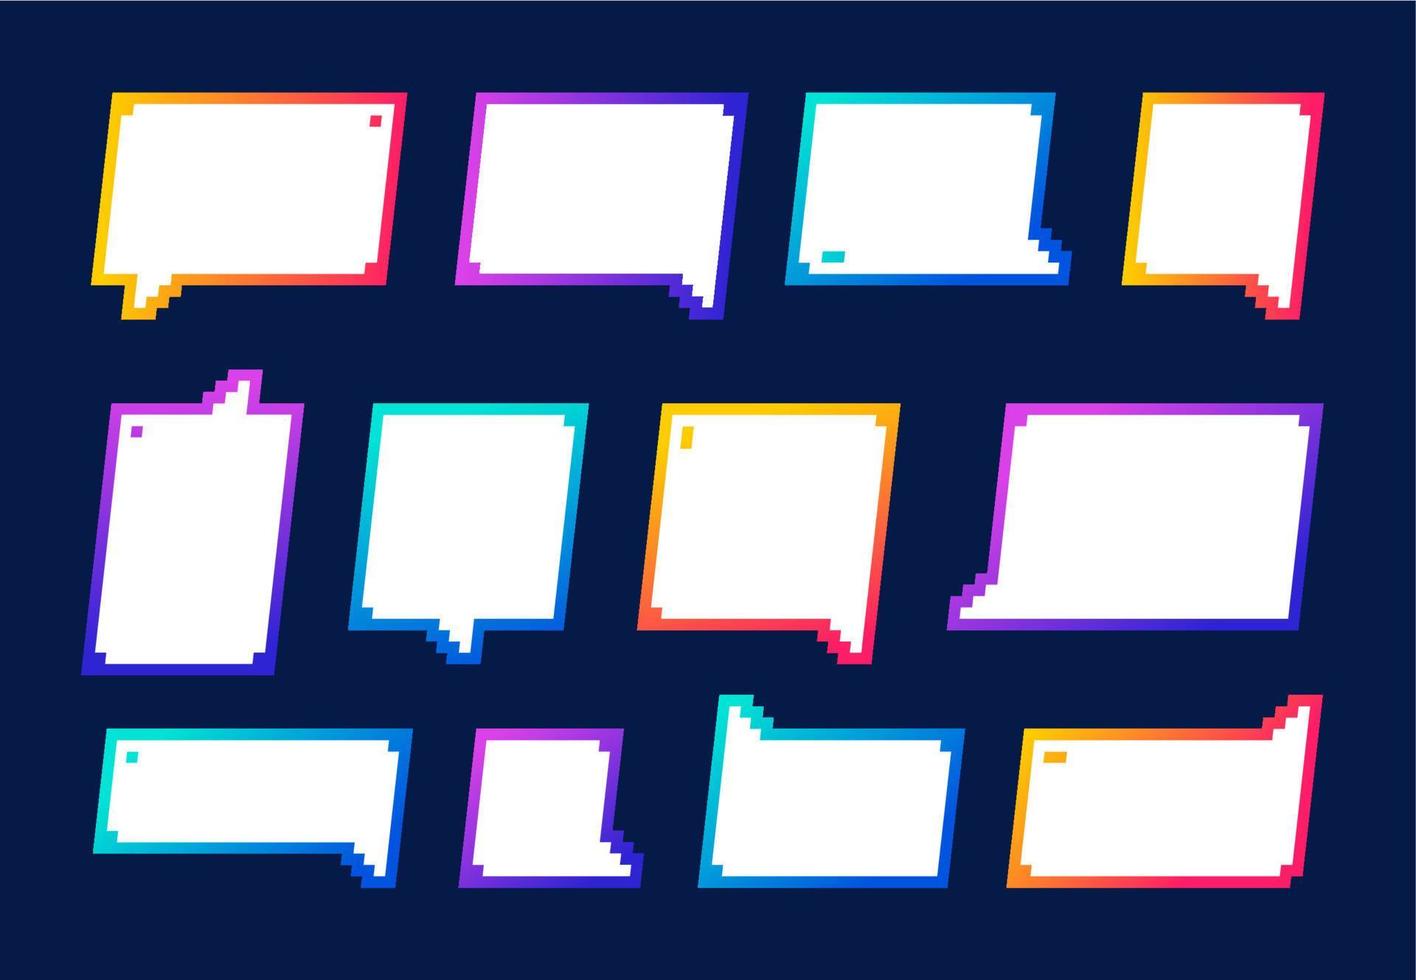 bordures de cadre de jeu de pixels, zones d'information, bulles de texte vecteur